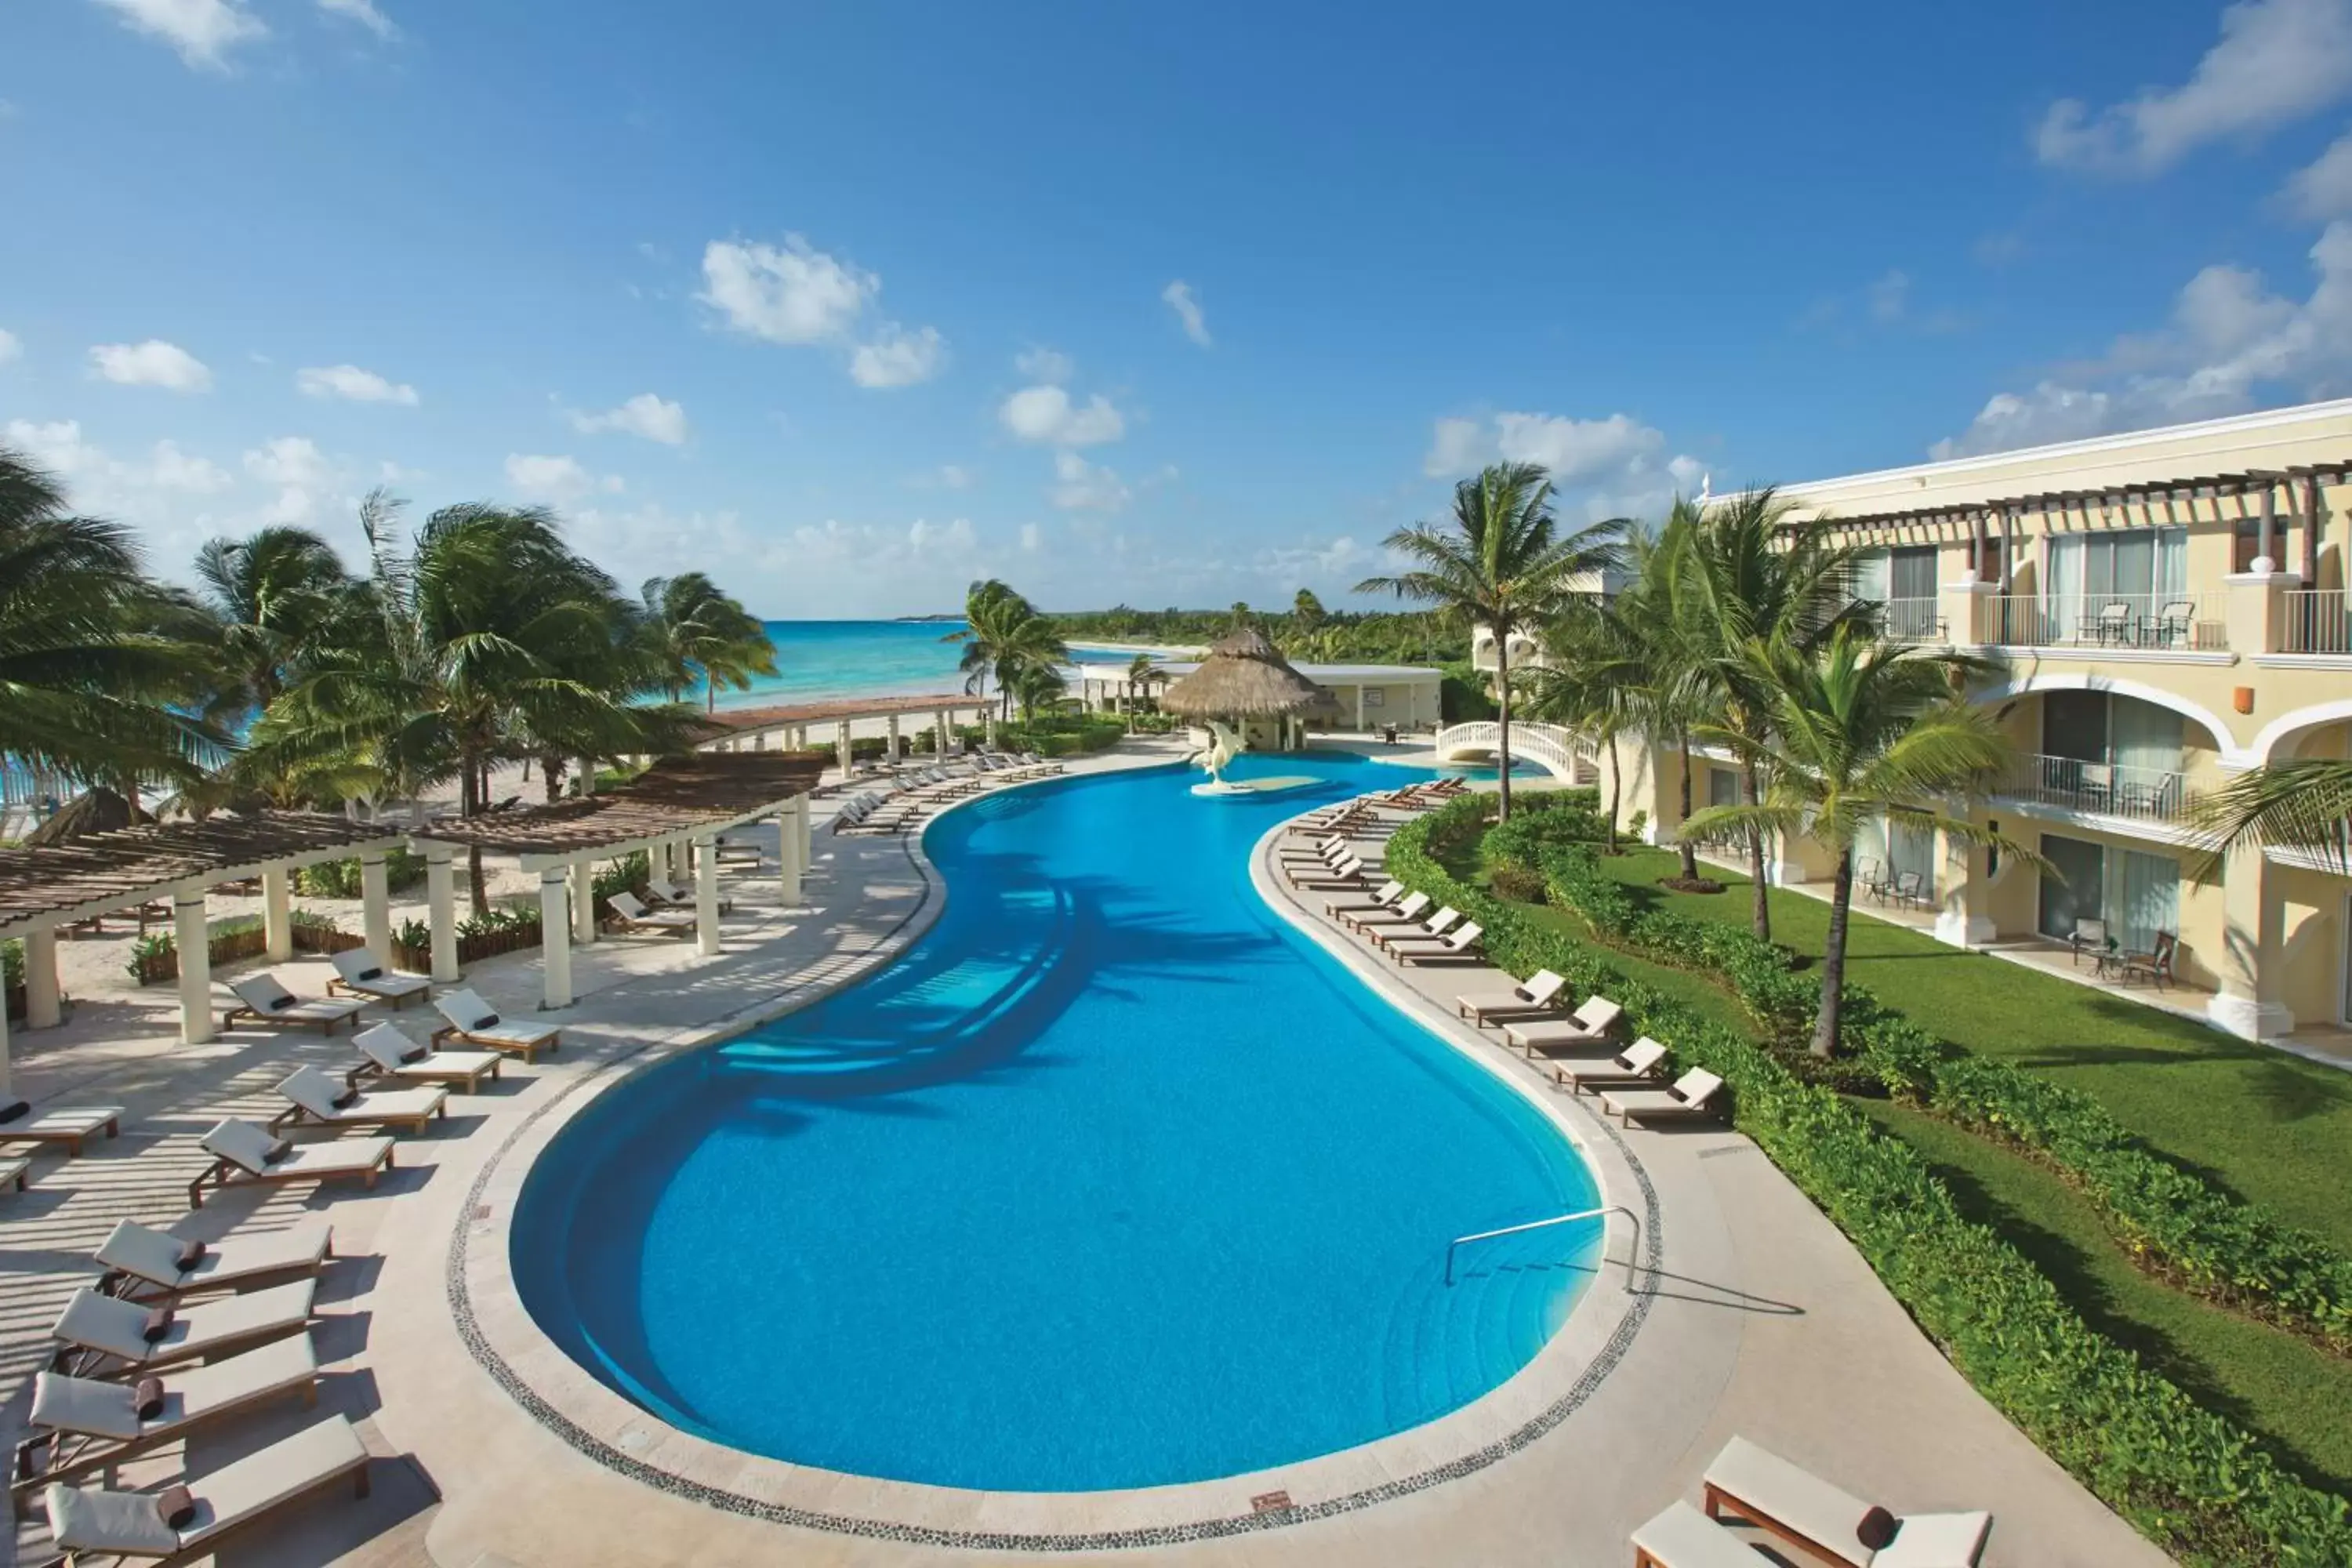 On site, Pool View in Dreams Tulum Resort & Spa